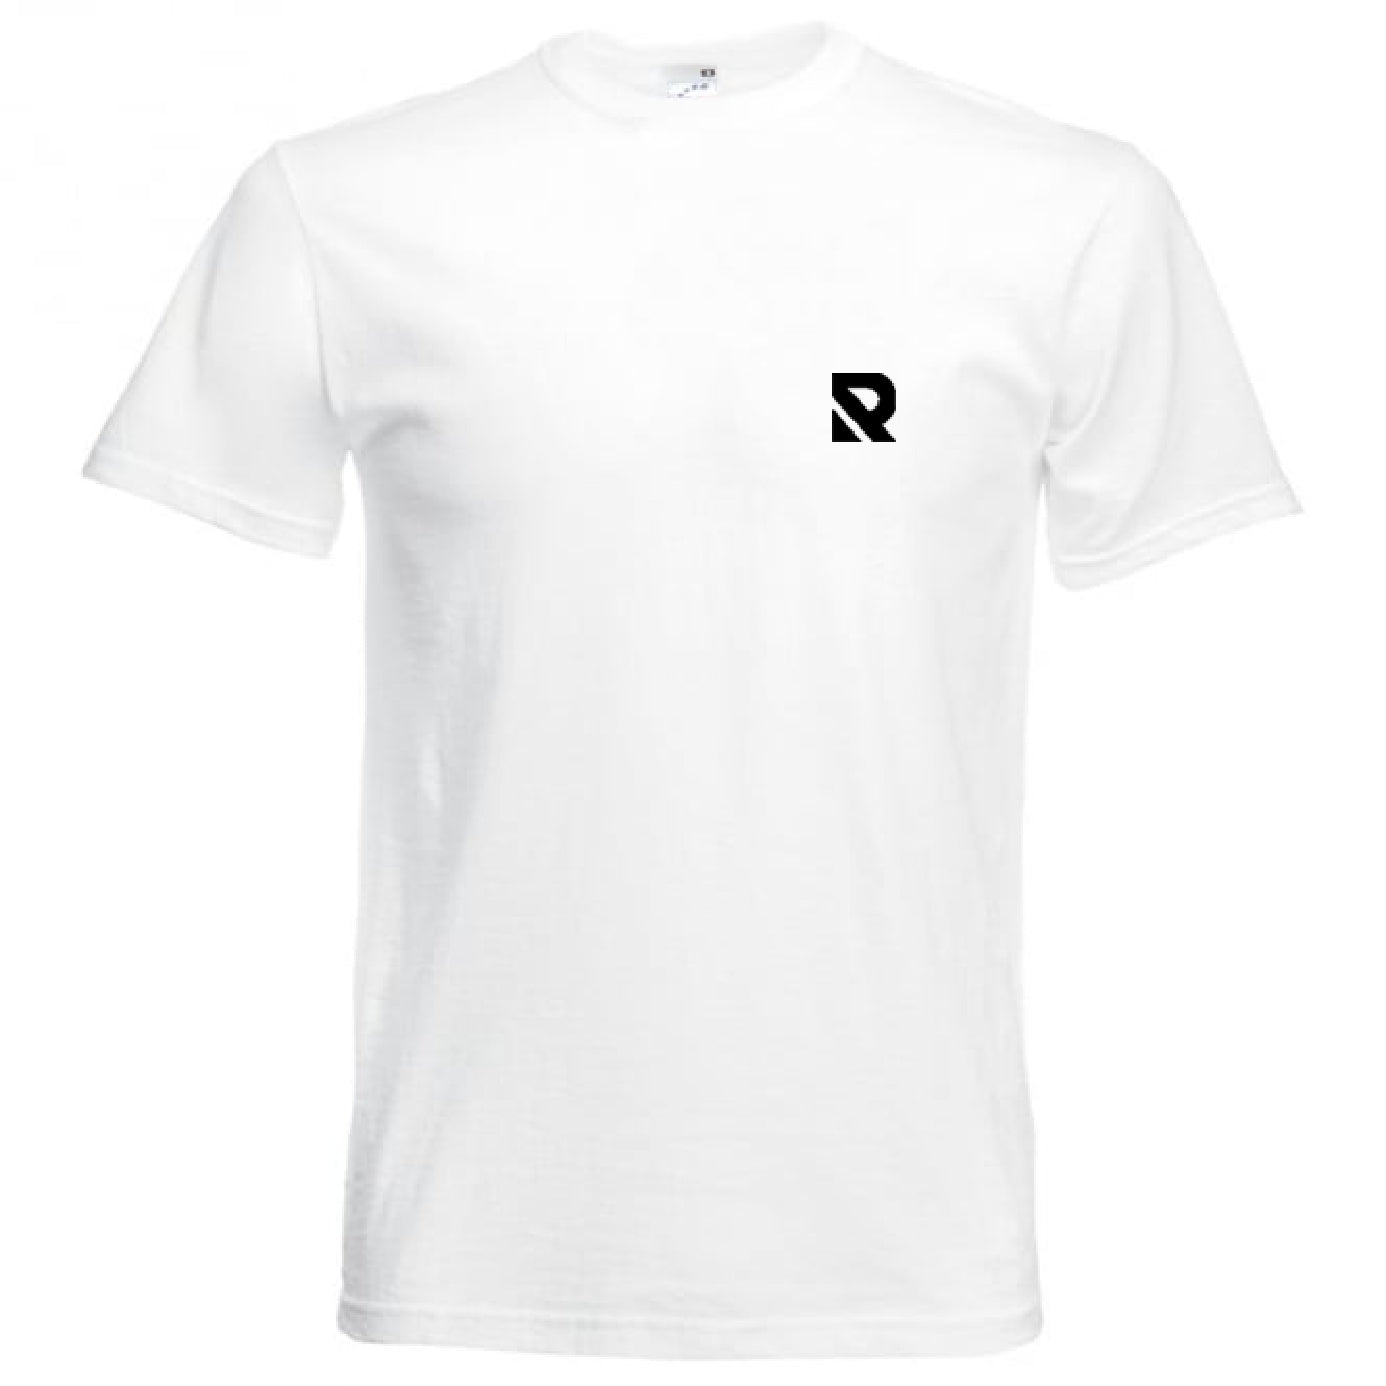 White/Black Original T-shirt